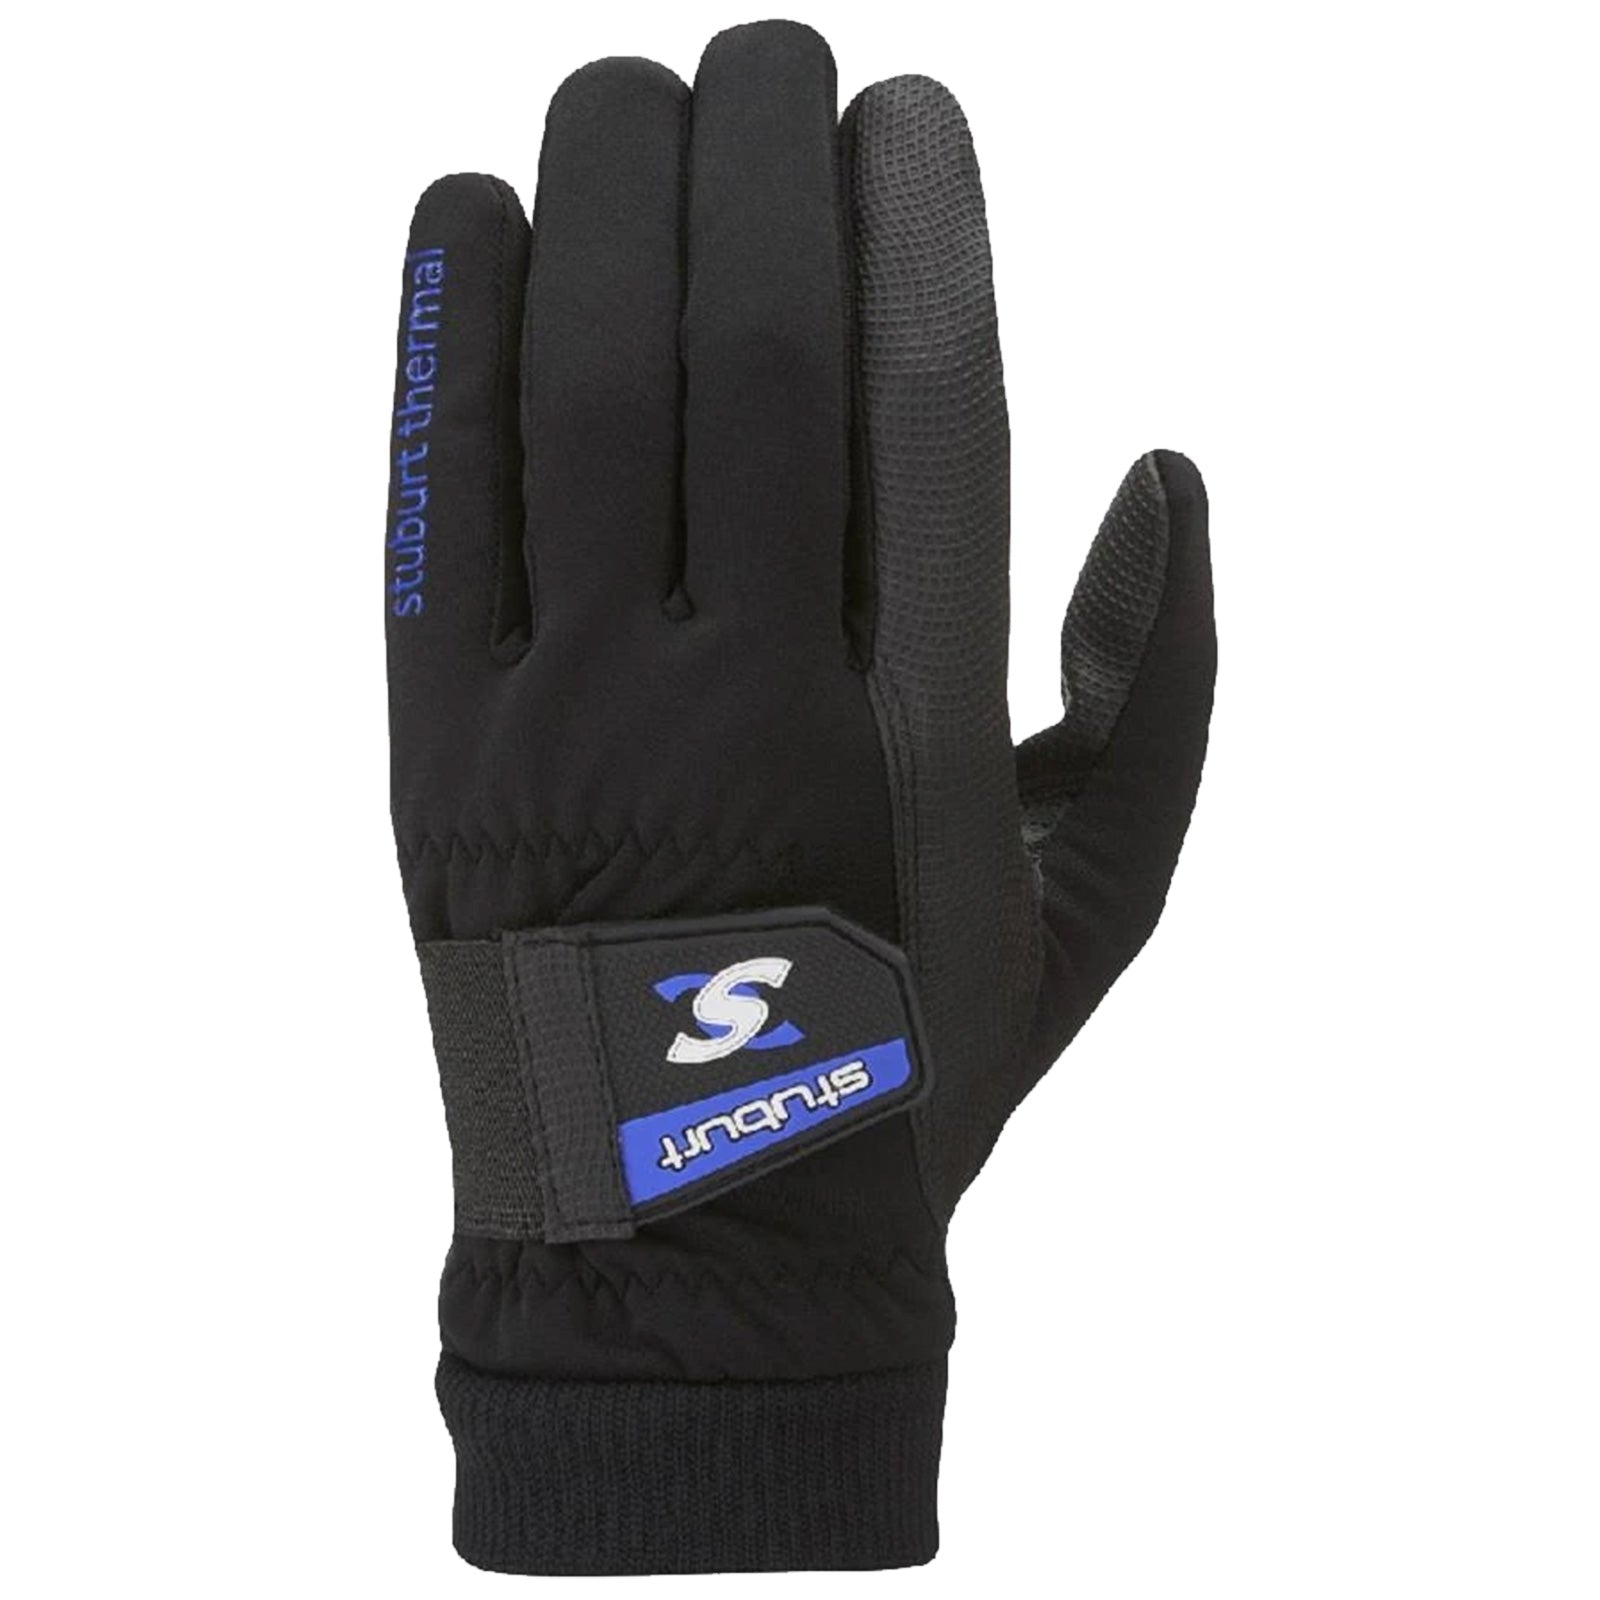 Stuburt Mens Thermal Golf Gloves